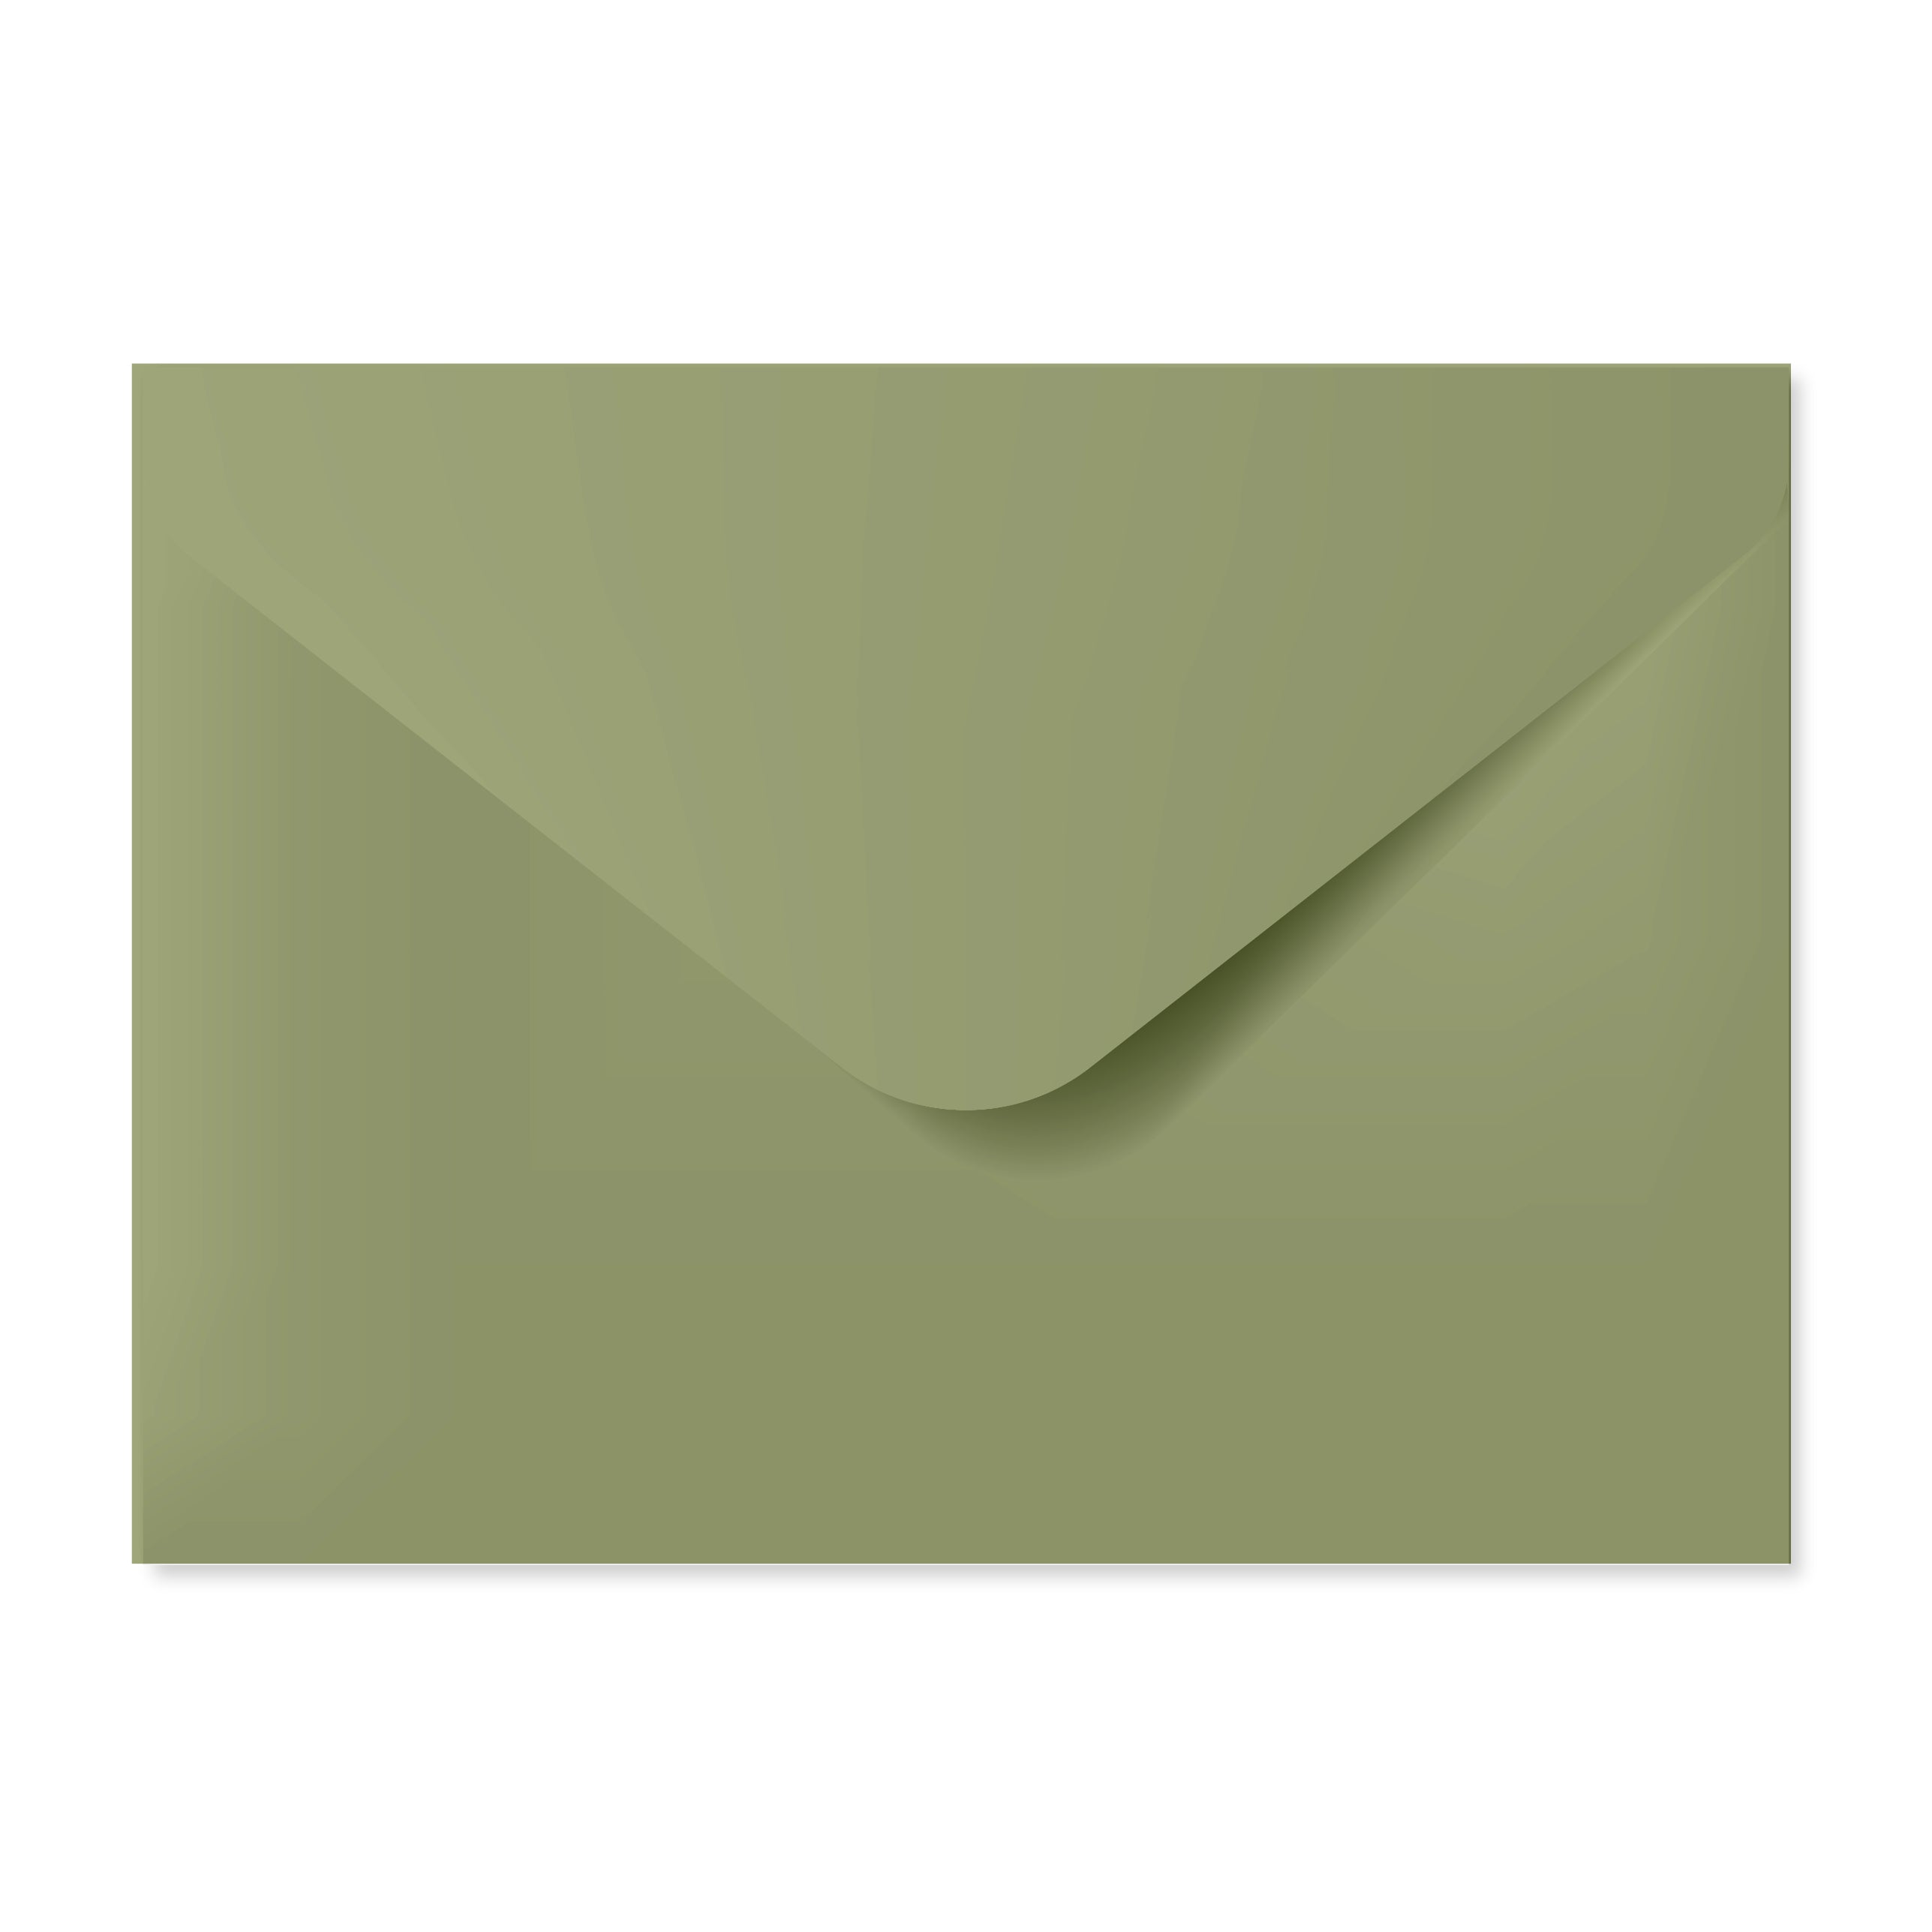 NT Rasha 151gsm Envelope 5.5"x7.75" mist green Default Title